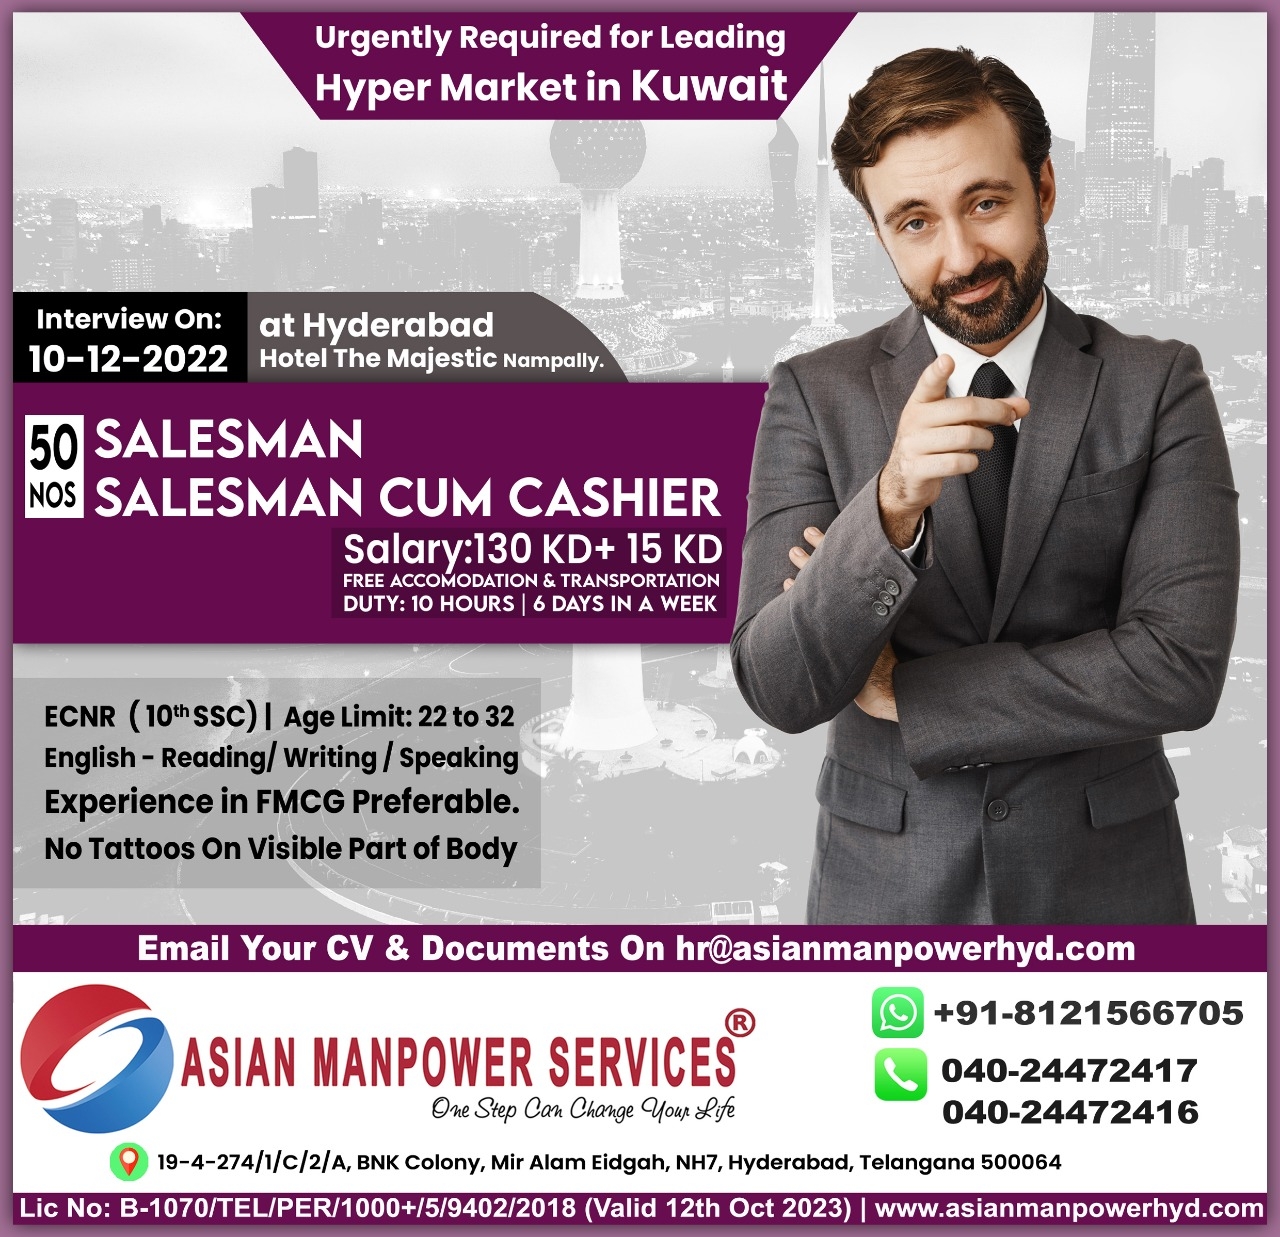 Asian manpower services - salesman interview Kuwait